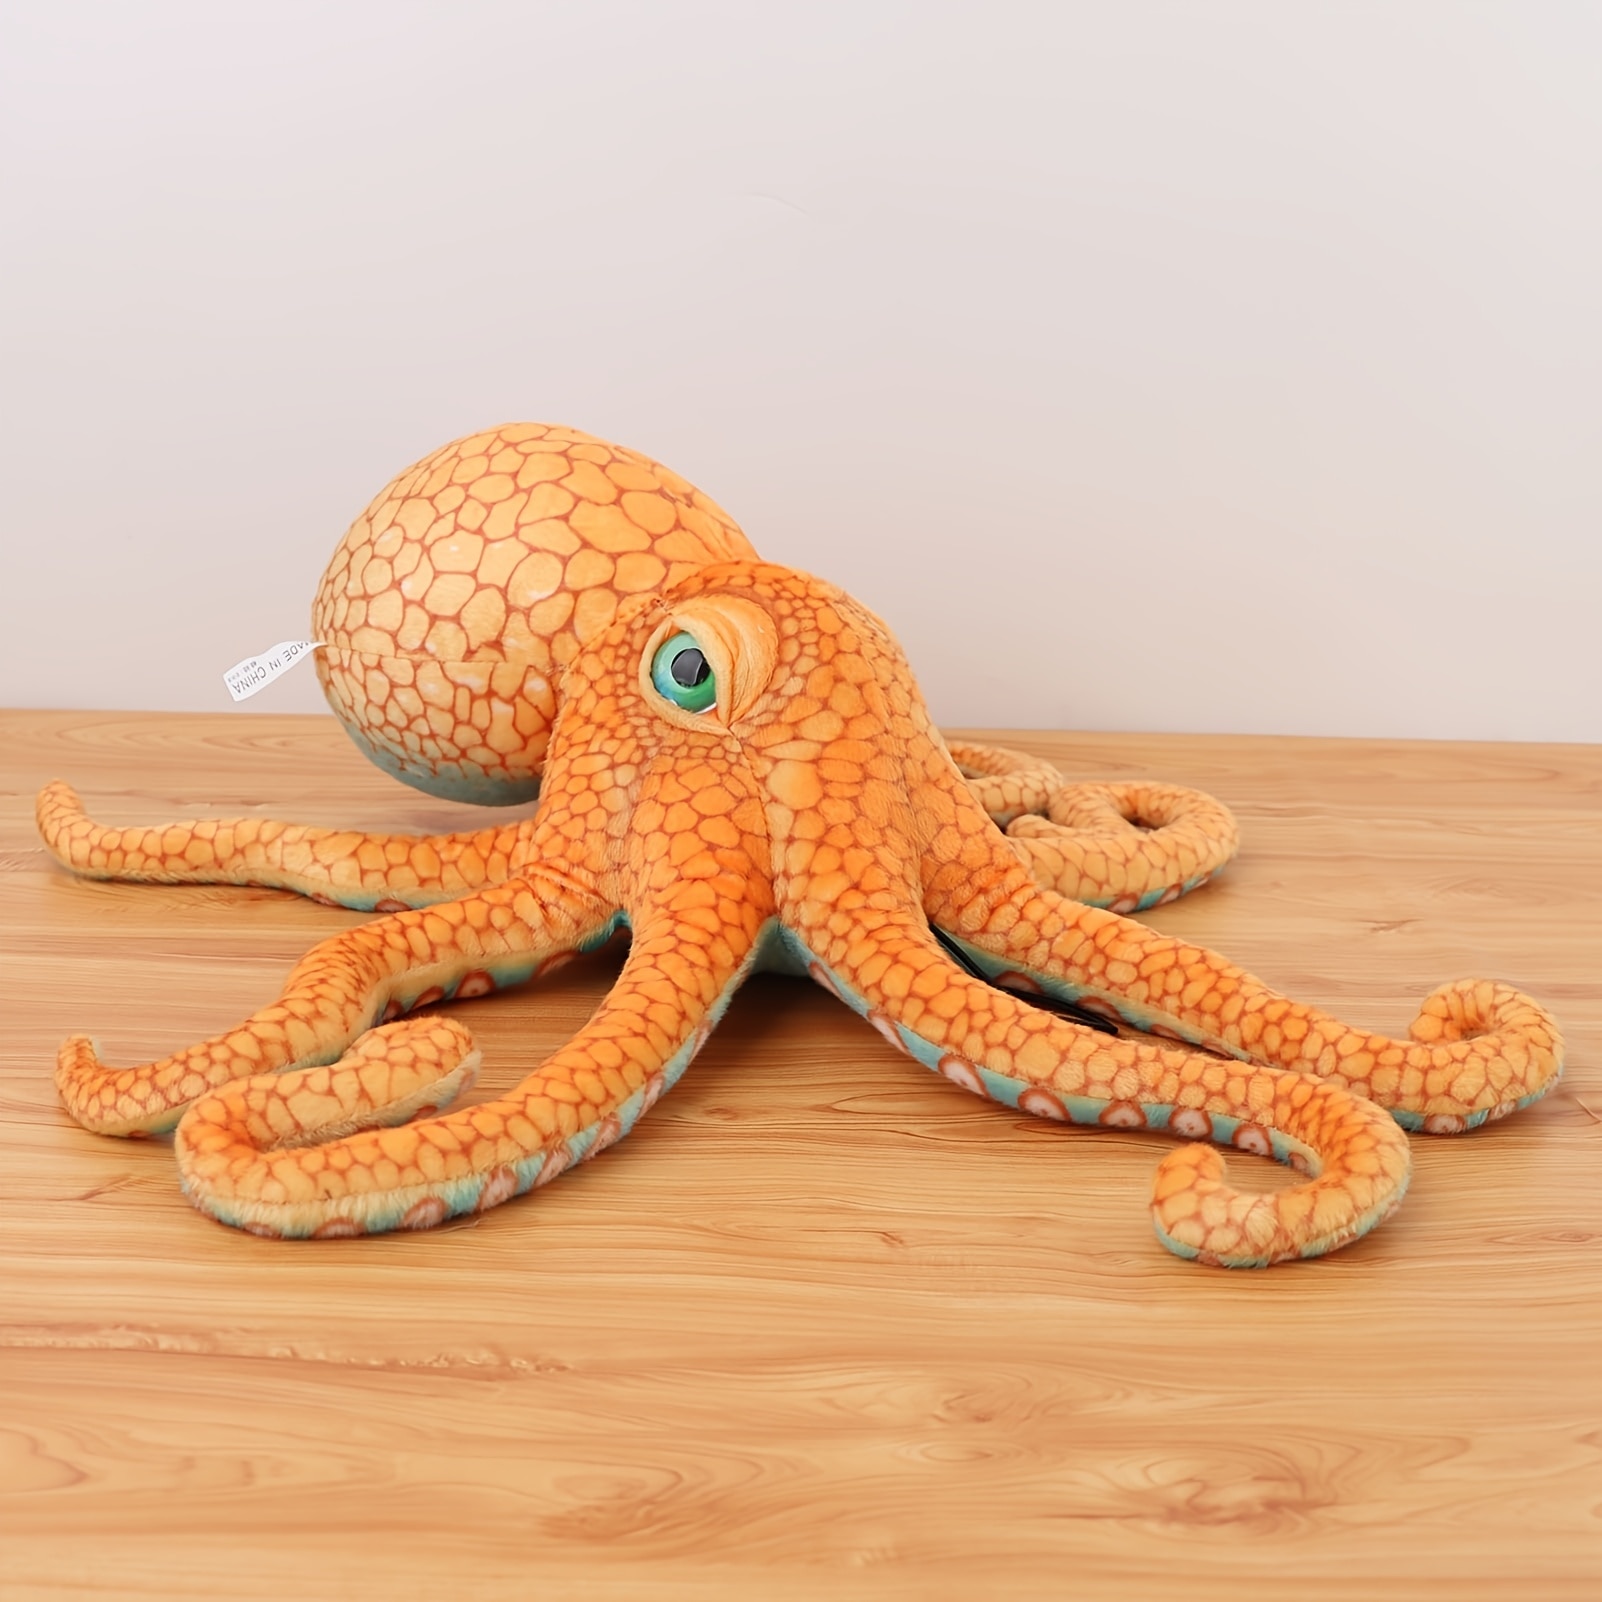 55 80cm Giant Simulated octopus Stuffed Toy High Quality lifelike Stuffed Sea Animal Doll Plush toys